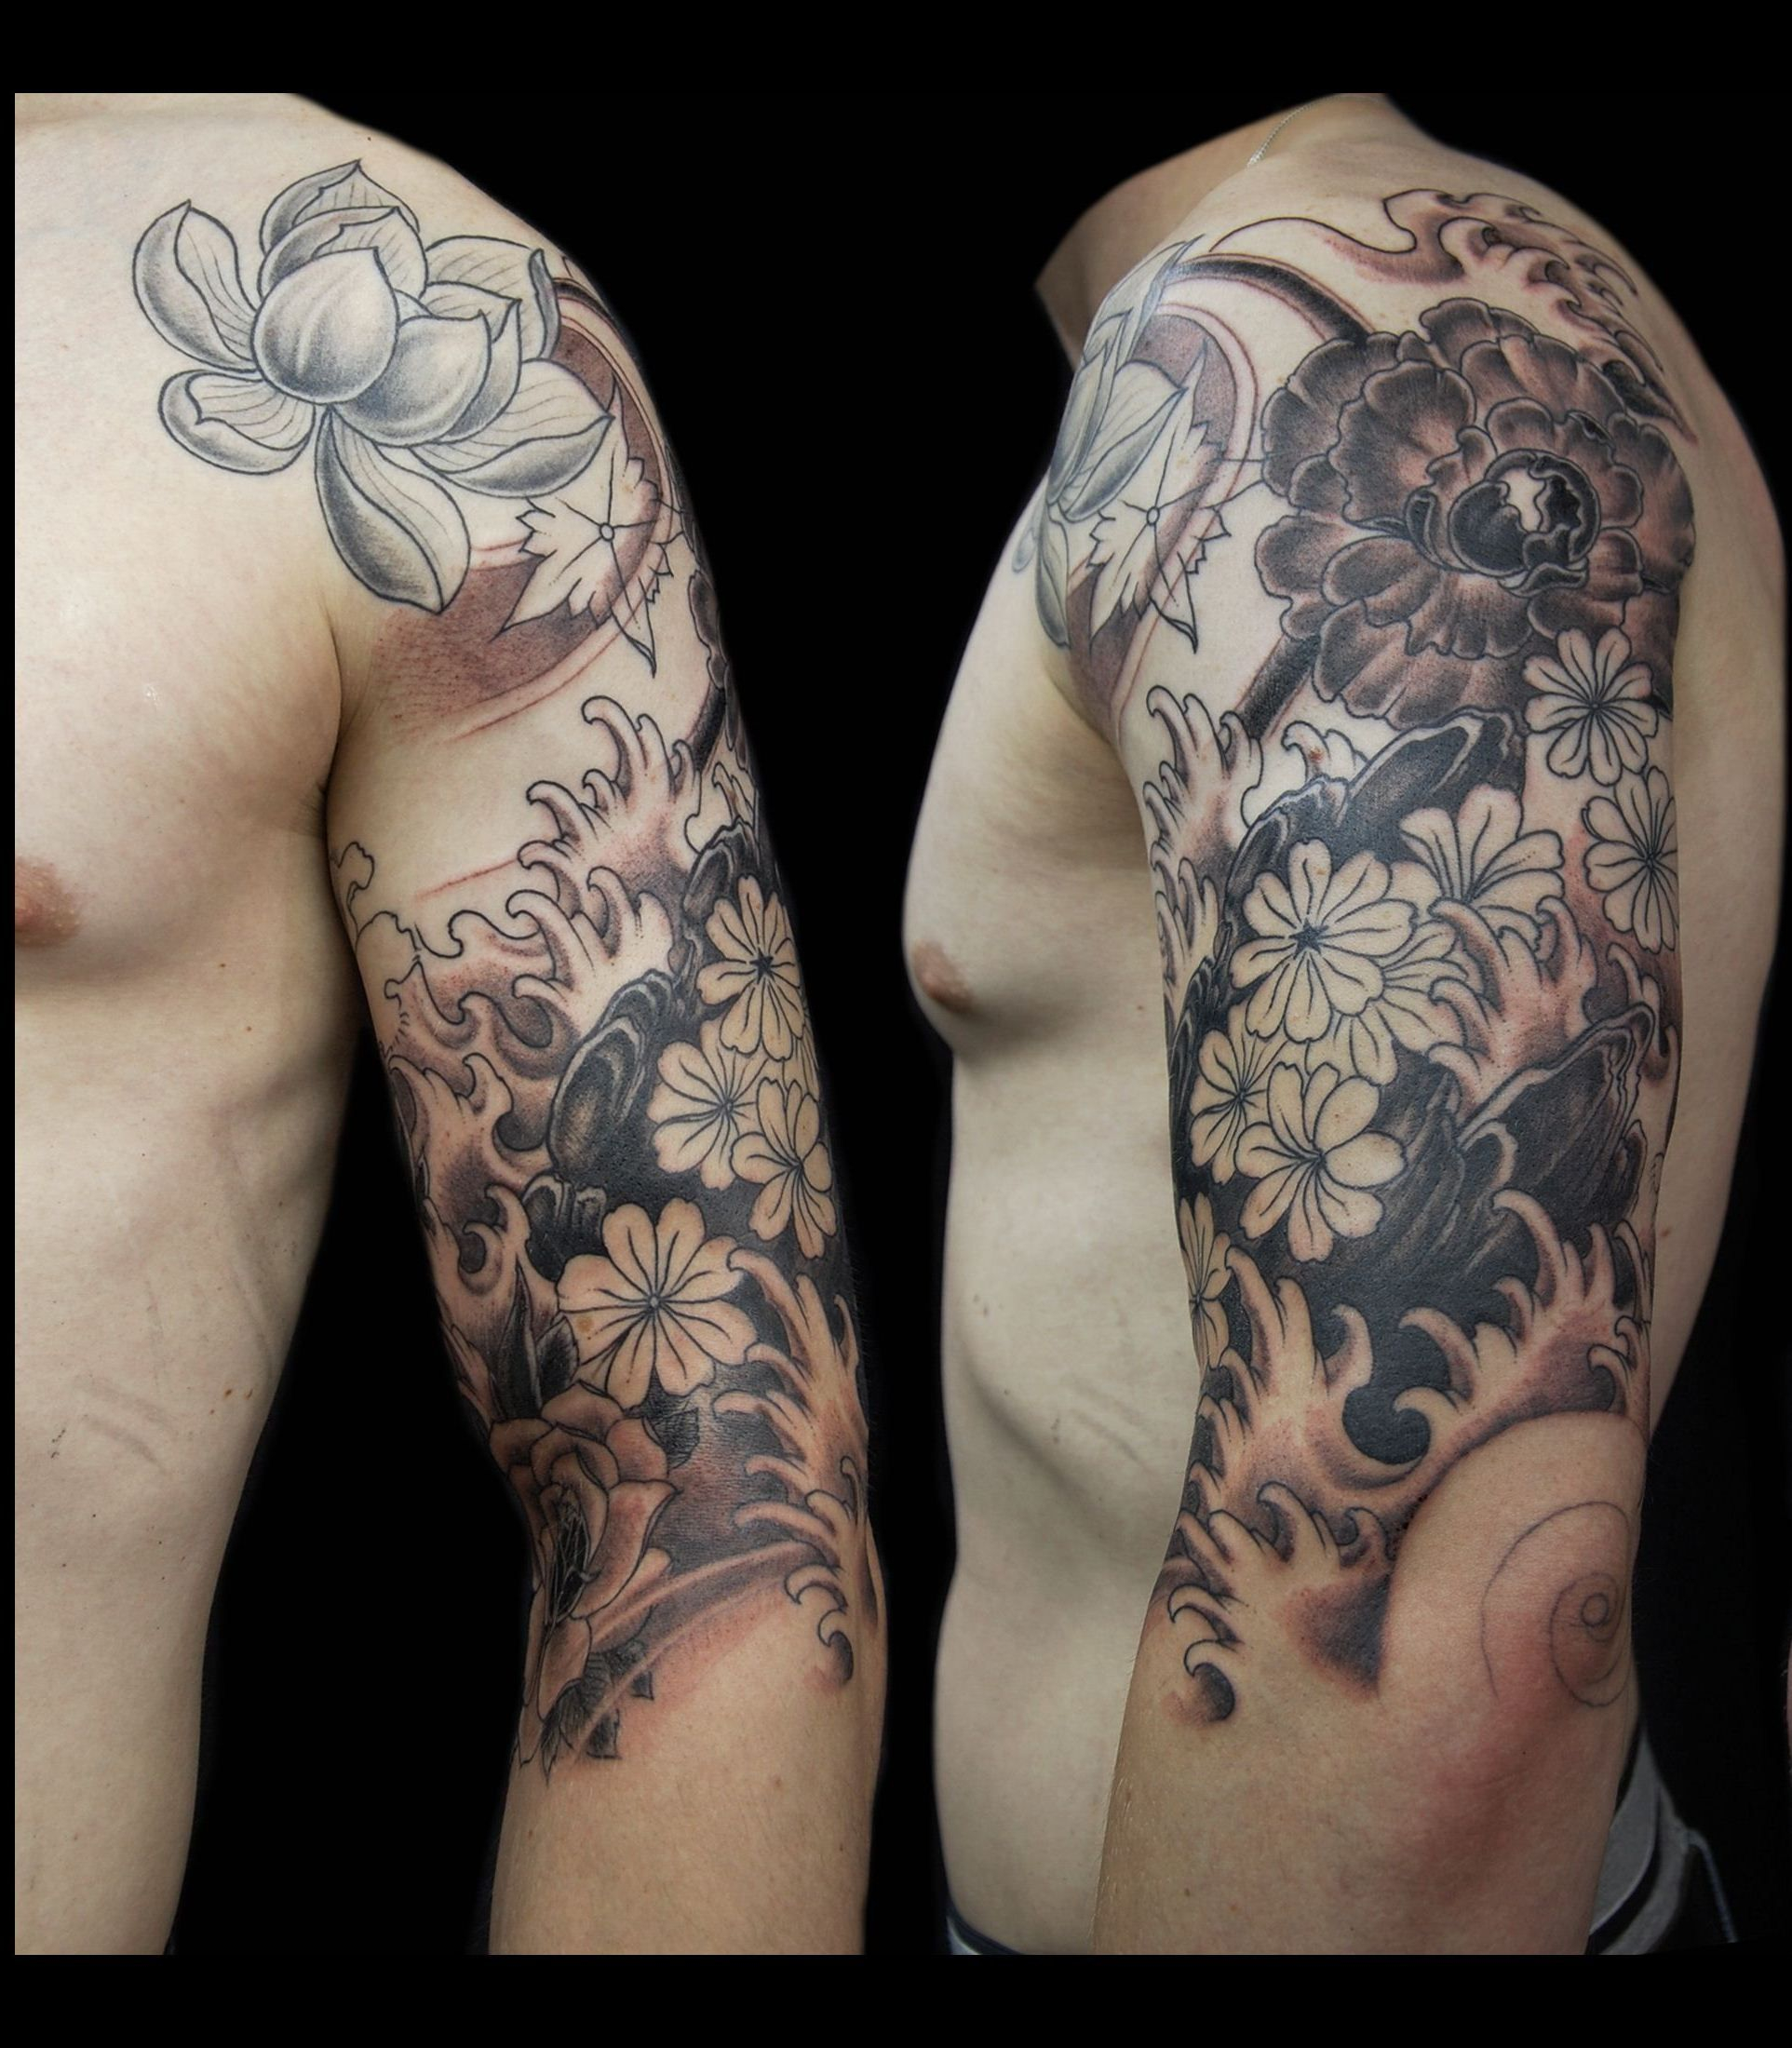 Flower Tattoo Sleeve For Men Flower Tattoos For Men Get Rotem inside dimensions 1925 X 2200